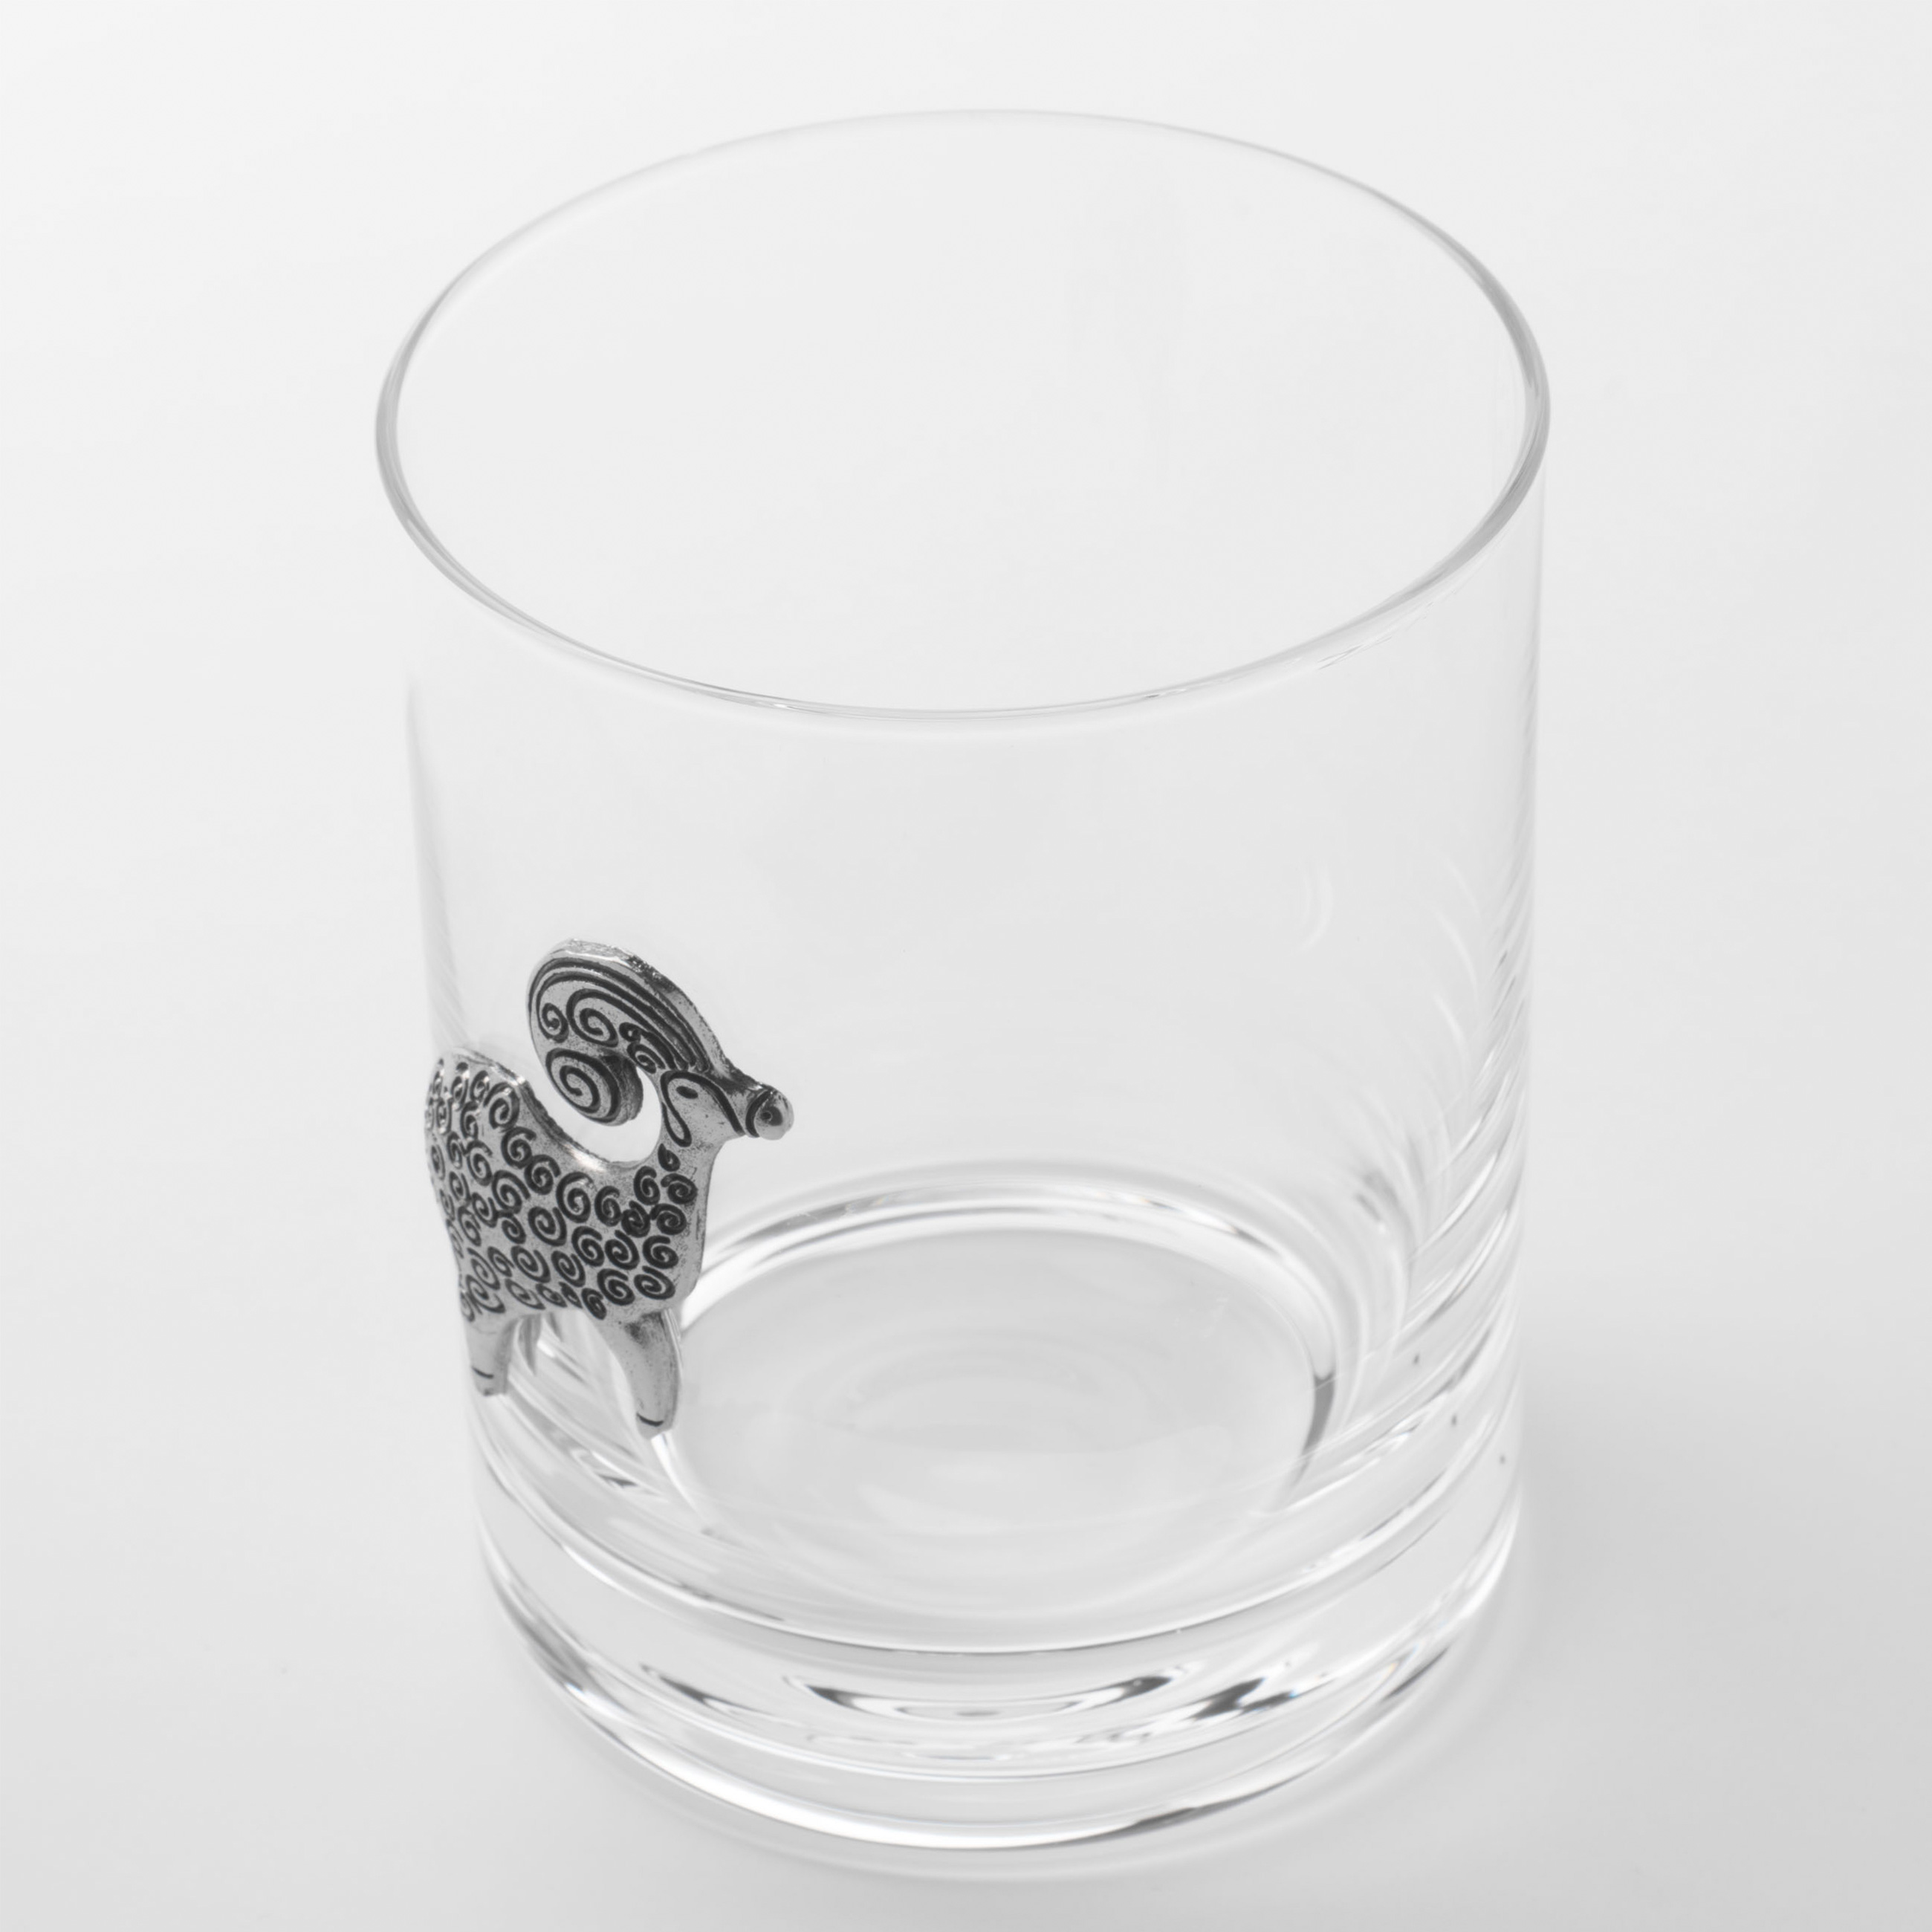 Стакан для виски, 10 см, 340 мл, стекло/металл, серебристый, Овен, Zodiac изображение № 2